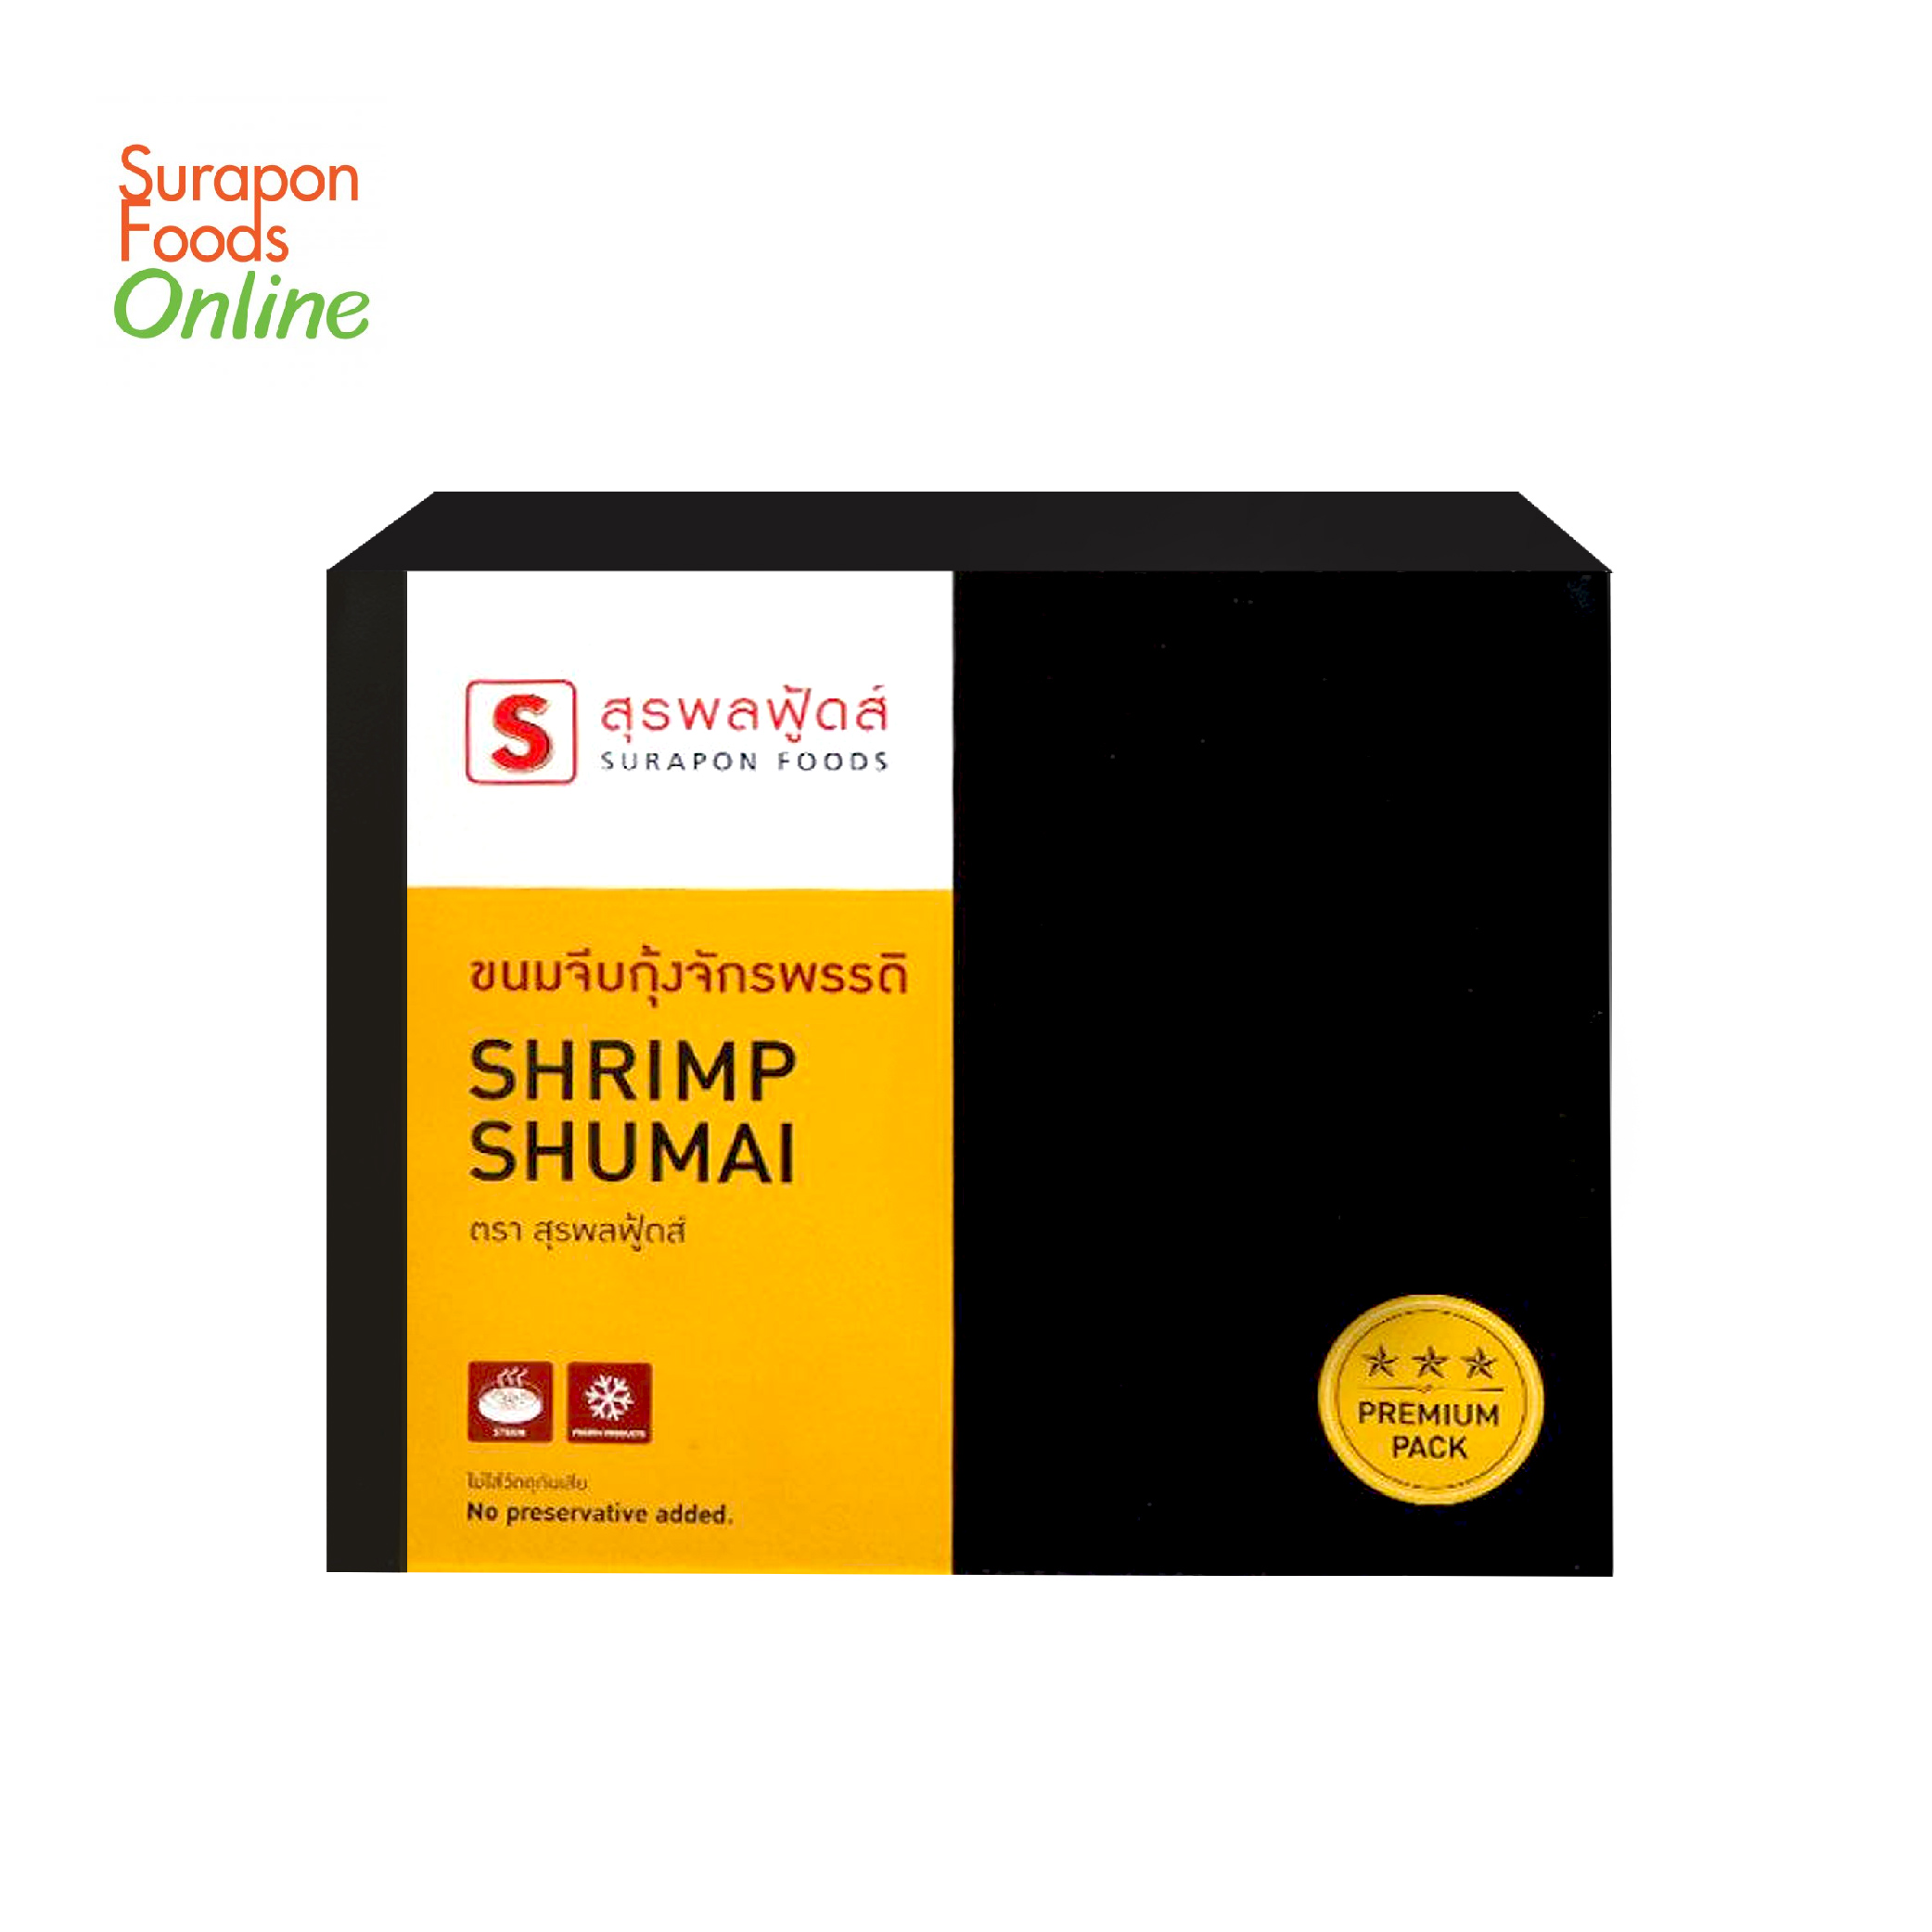 Surapon Foods ขนมจีบกุ้งจักรพรรดิ์(Shrimp Shumai) กล่องใหญ่ 60 ชิ้น/กล่อง